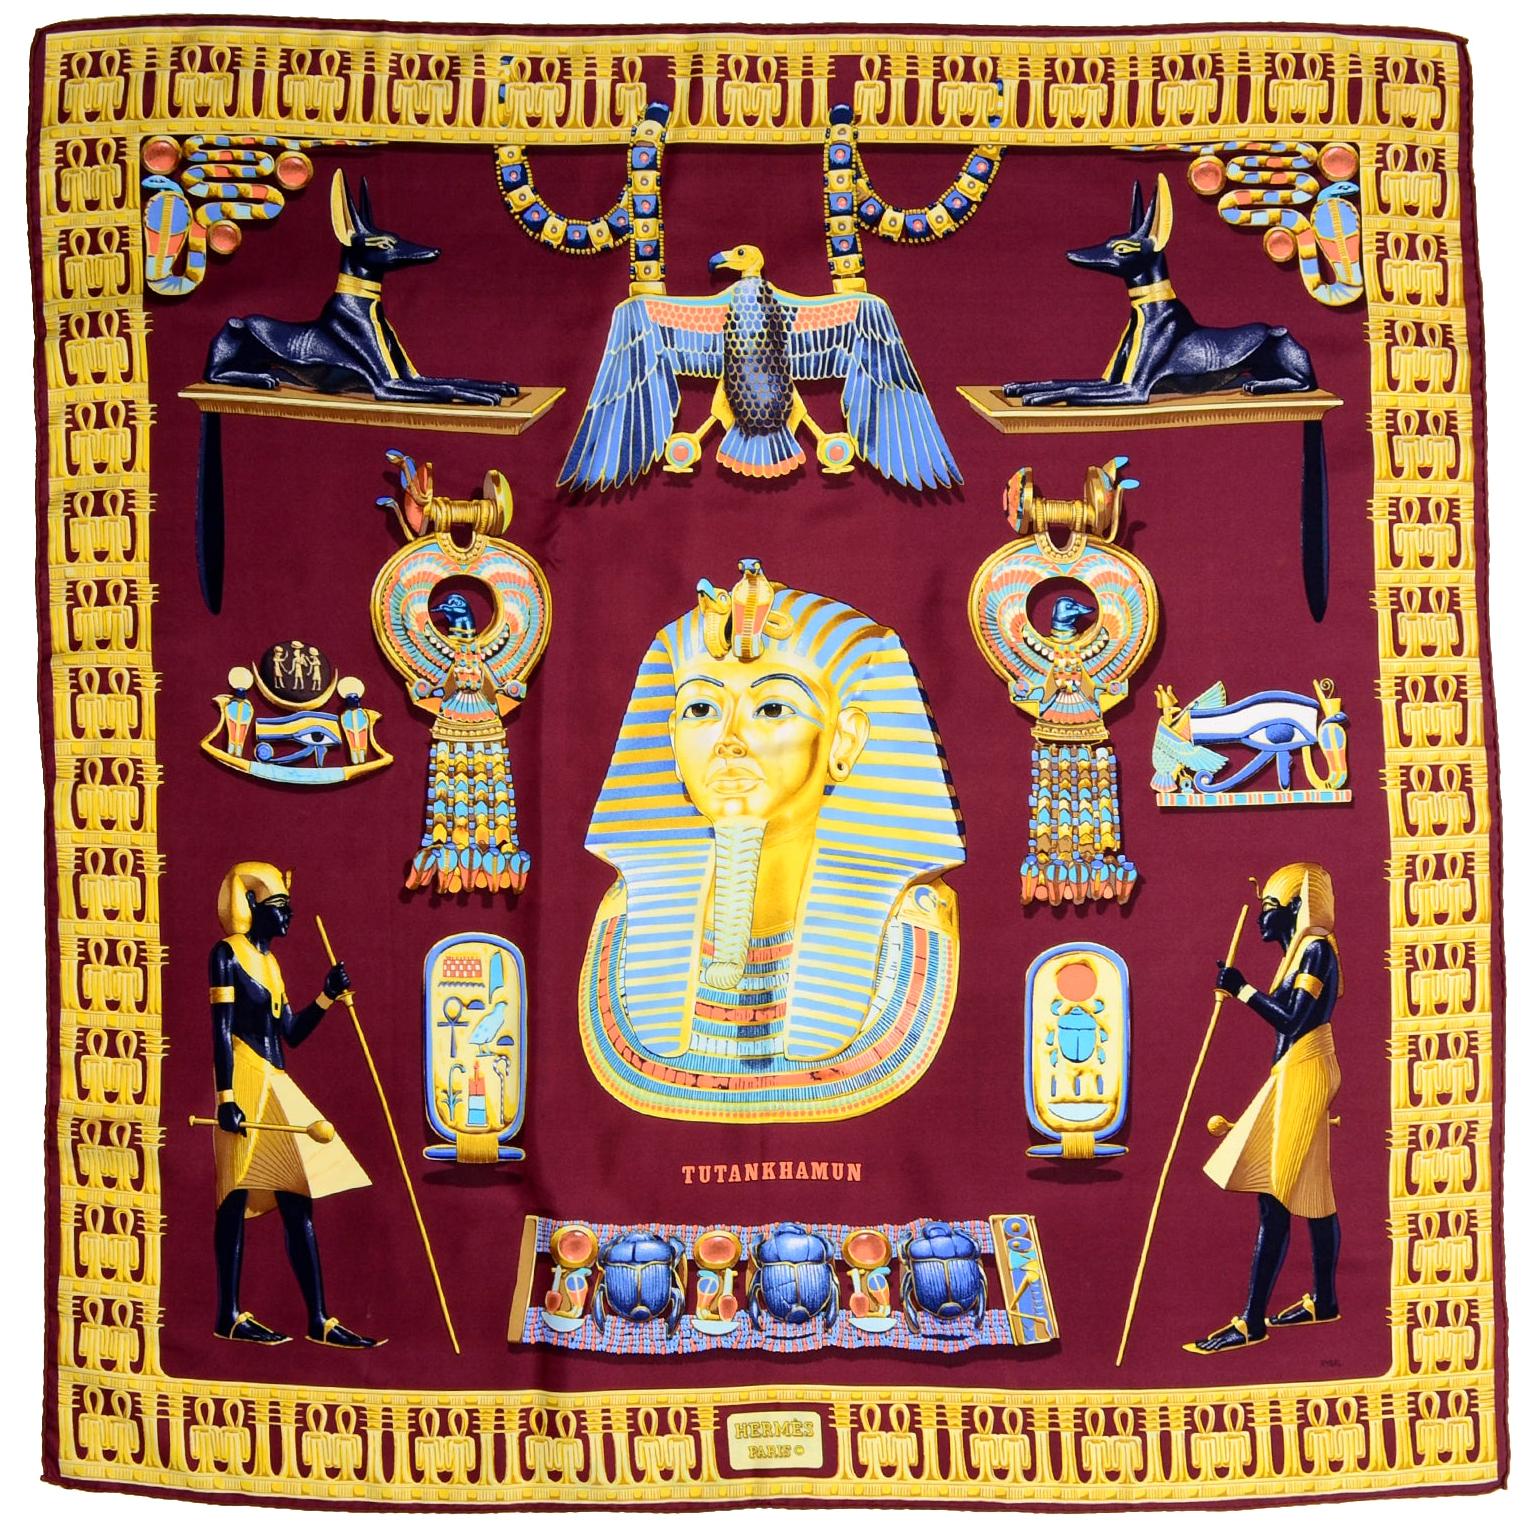 Hermes King Tut Tutankhamun Burgundy Silk Scarf by Vladimir Rybaltchenko in 1976